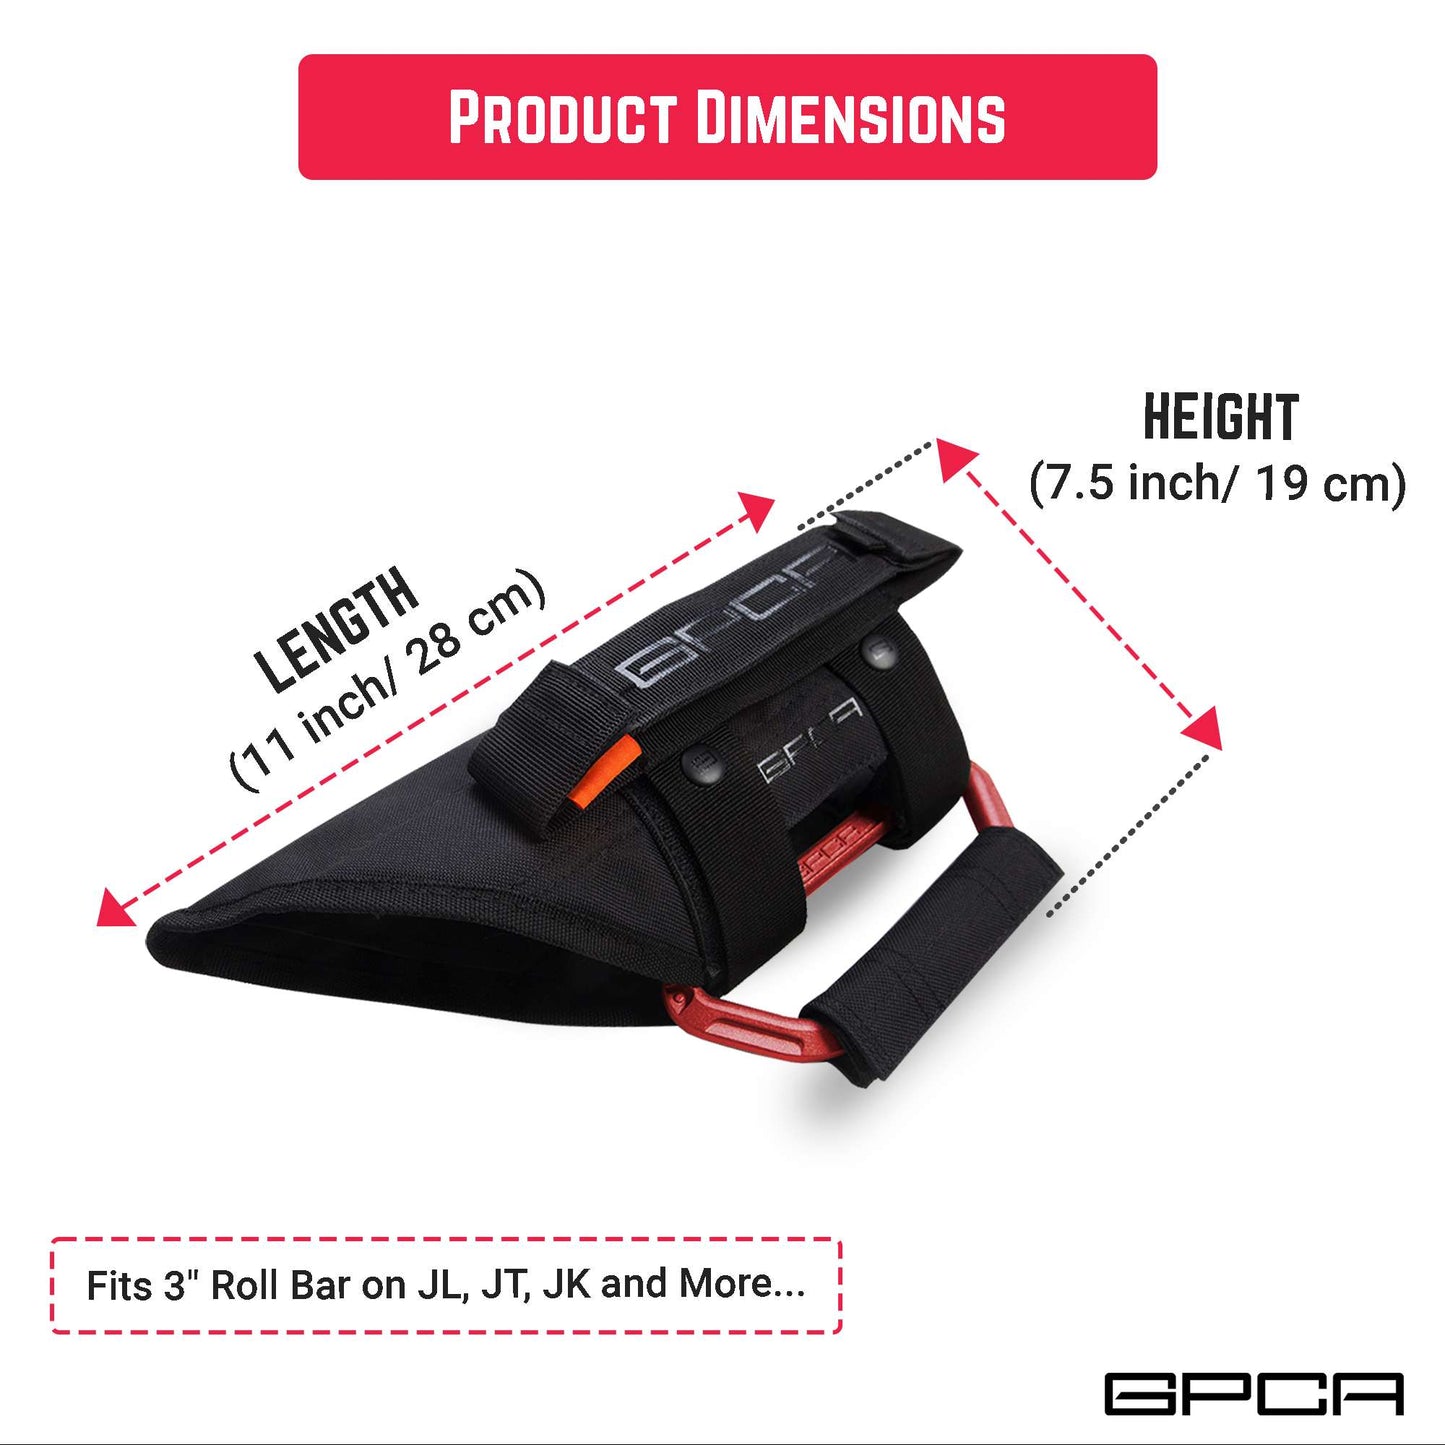 GPCA GP Grip Pro Red, Fits 3" Roll Bar on JL, JT, JK and More